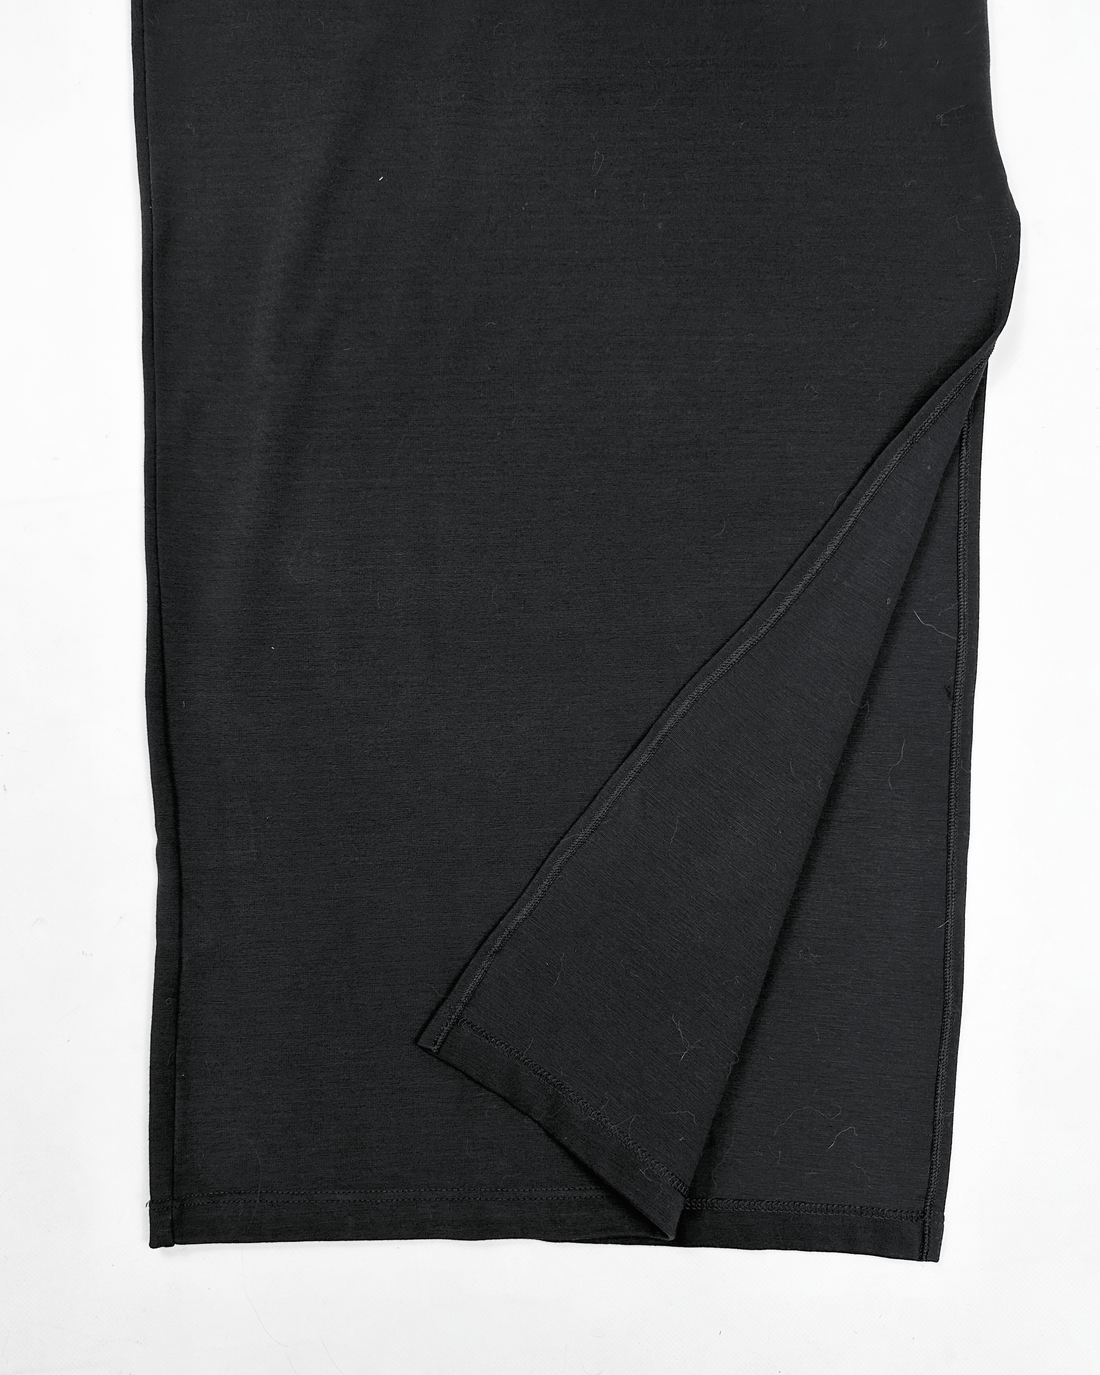 Kenzo Jungle Black Straight Skirt 2000's